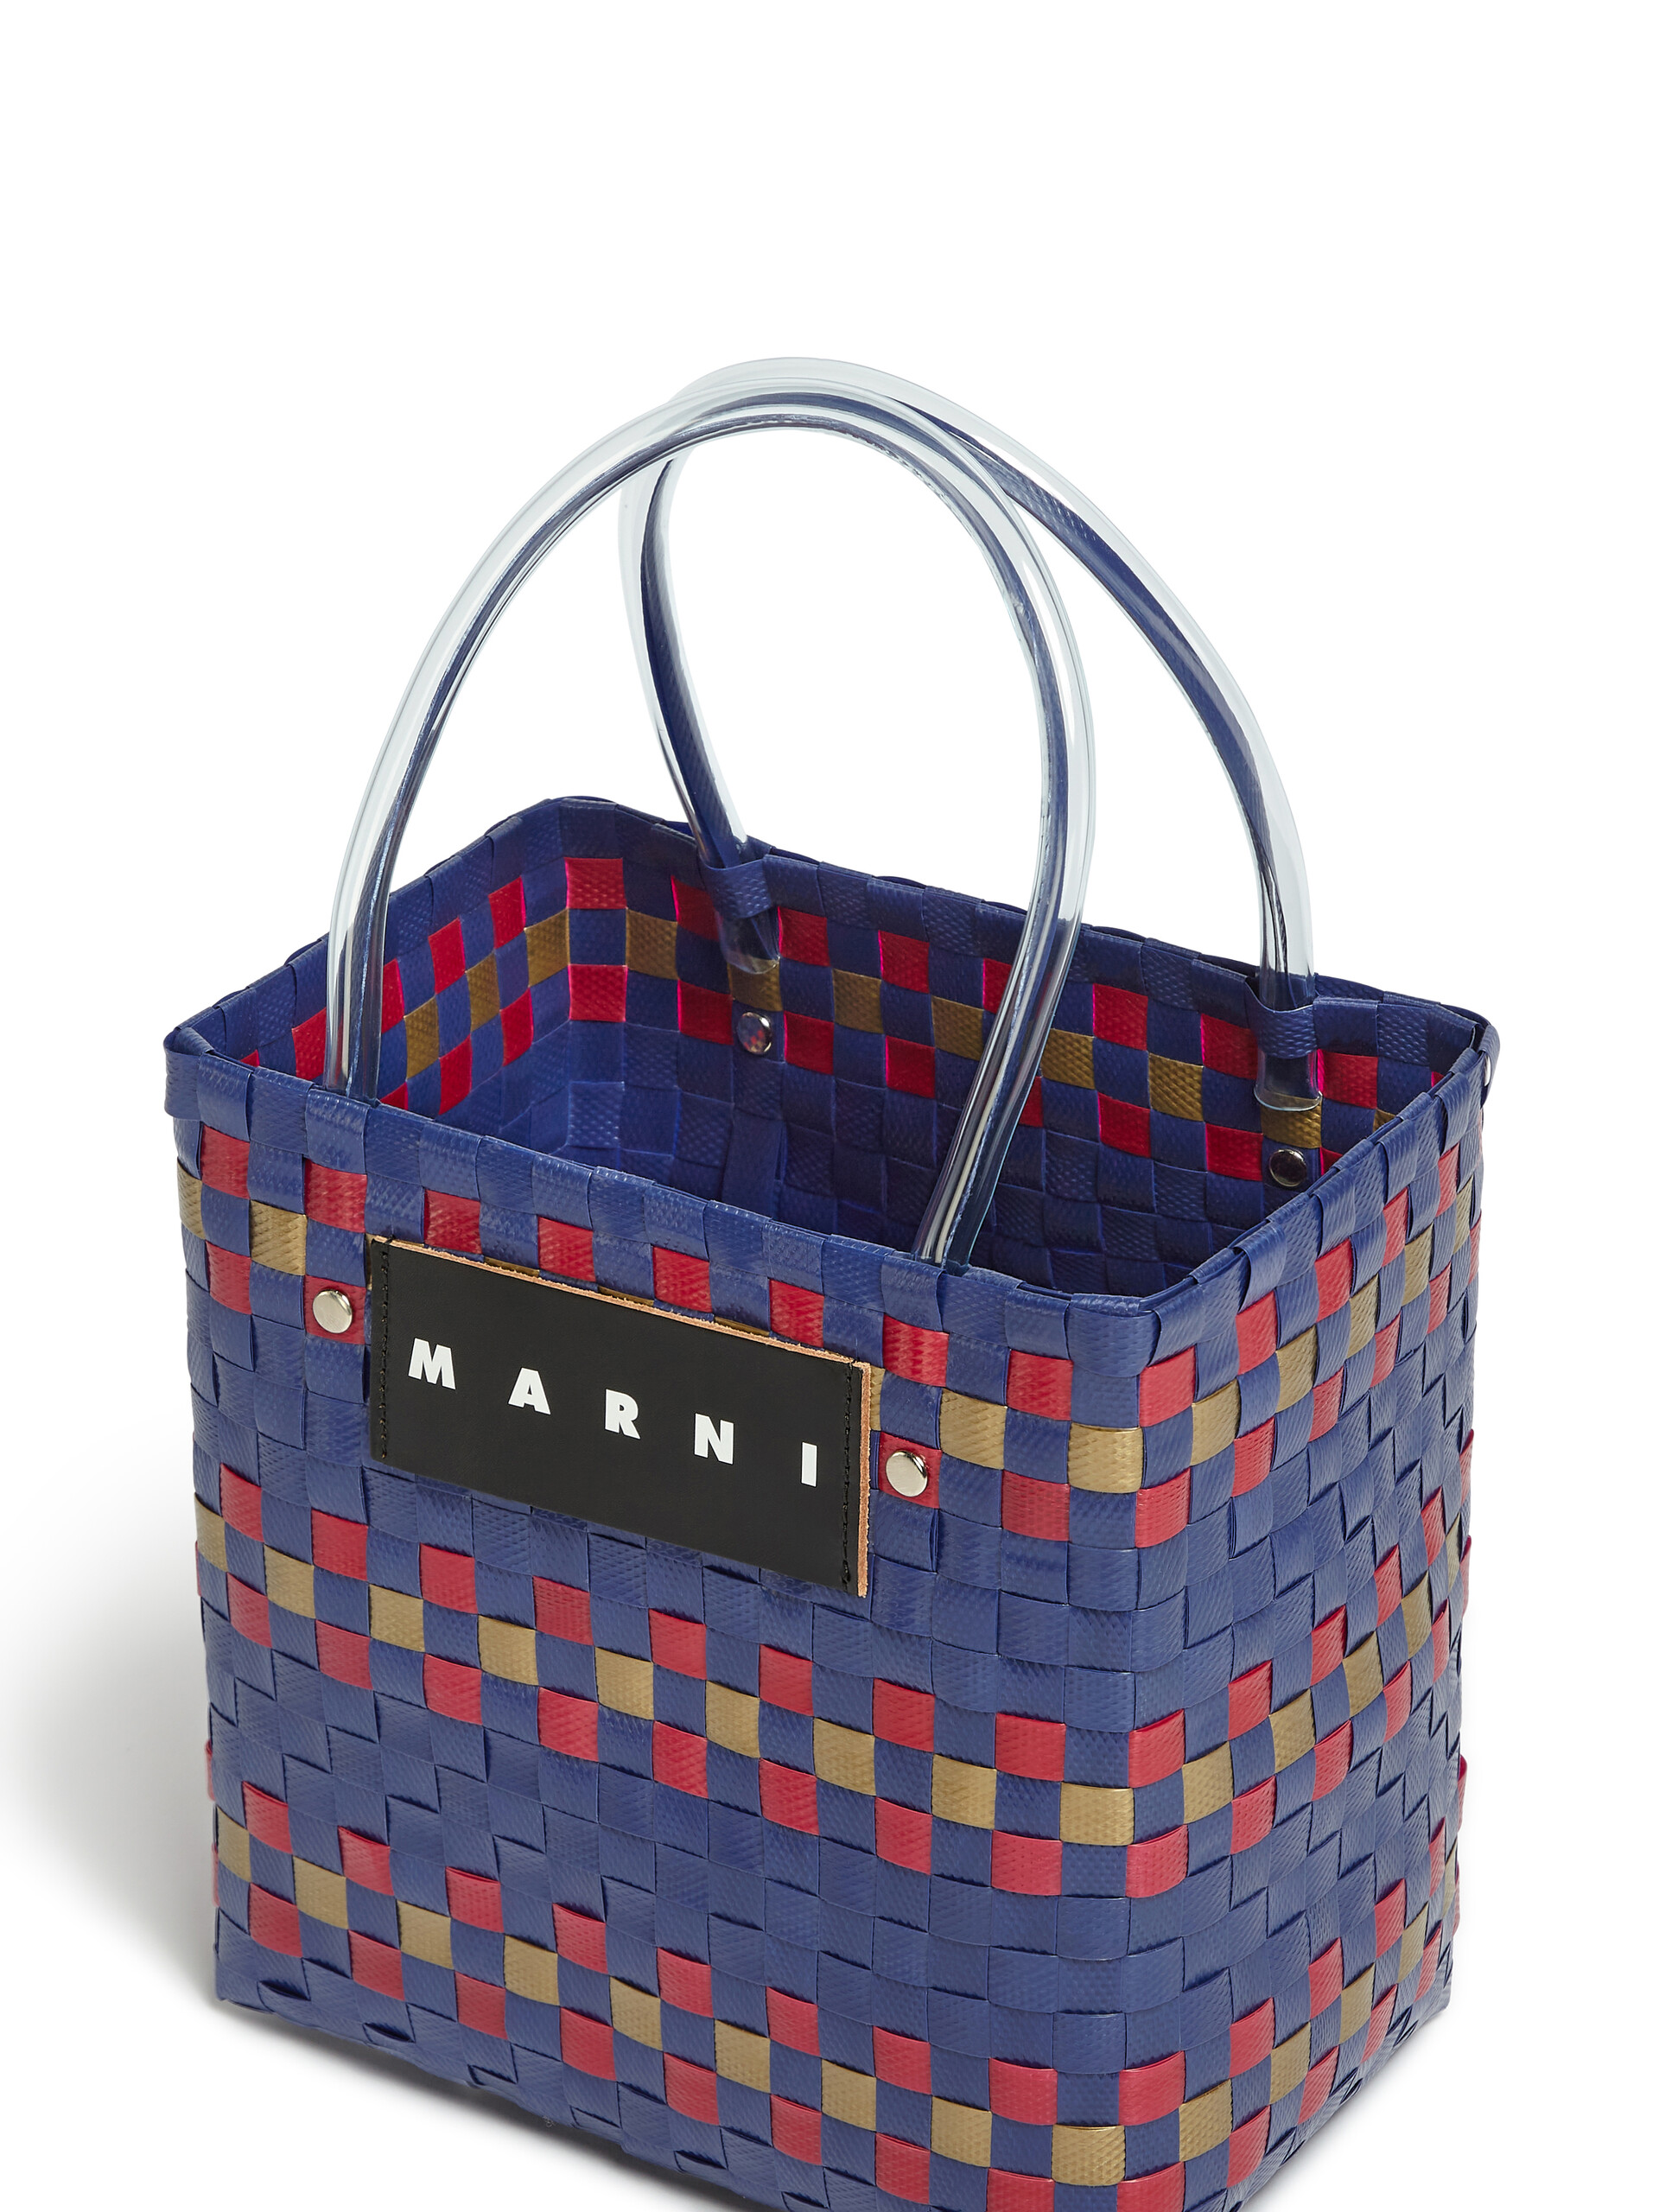 MARNI MARKET shopping bag in blue polypropylene - Bags - Image 4